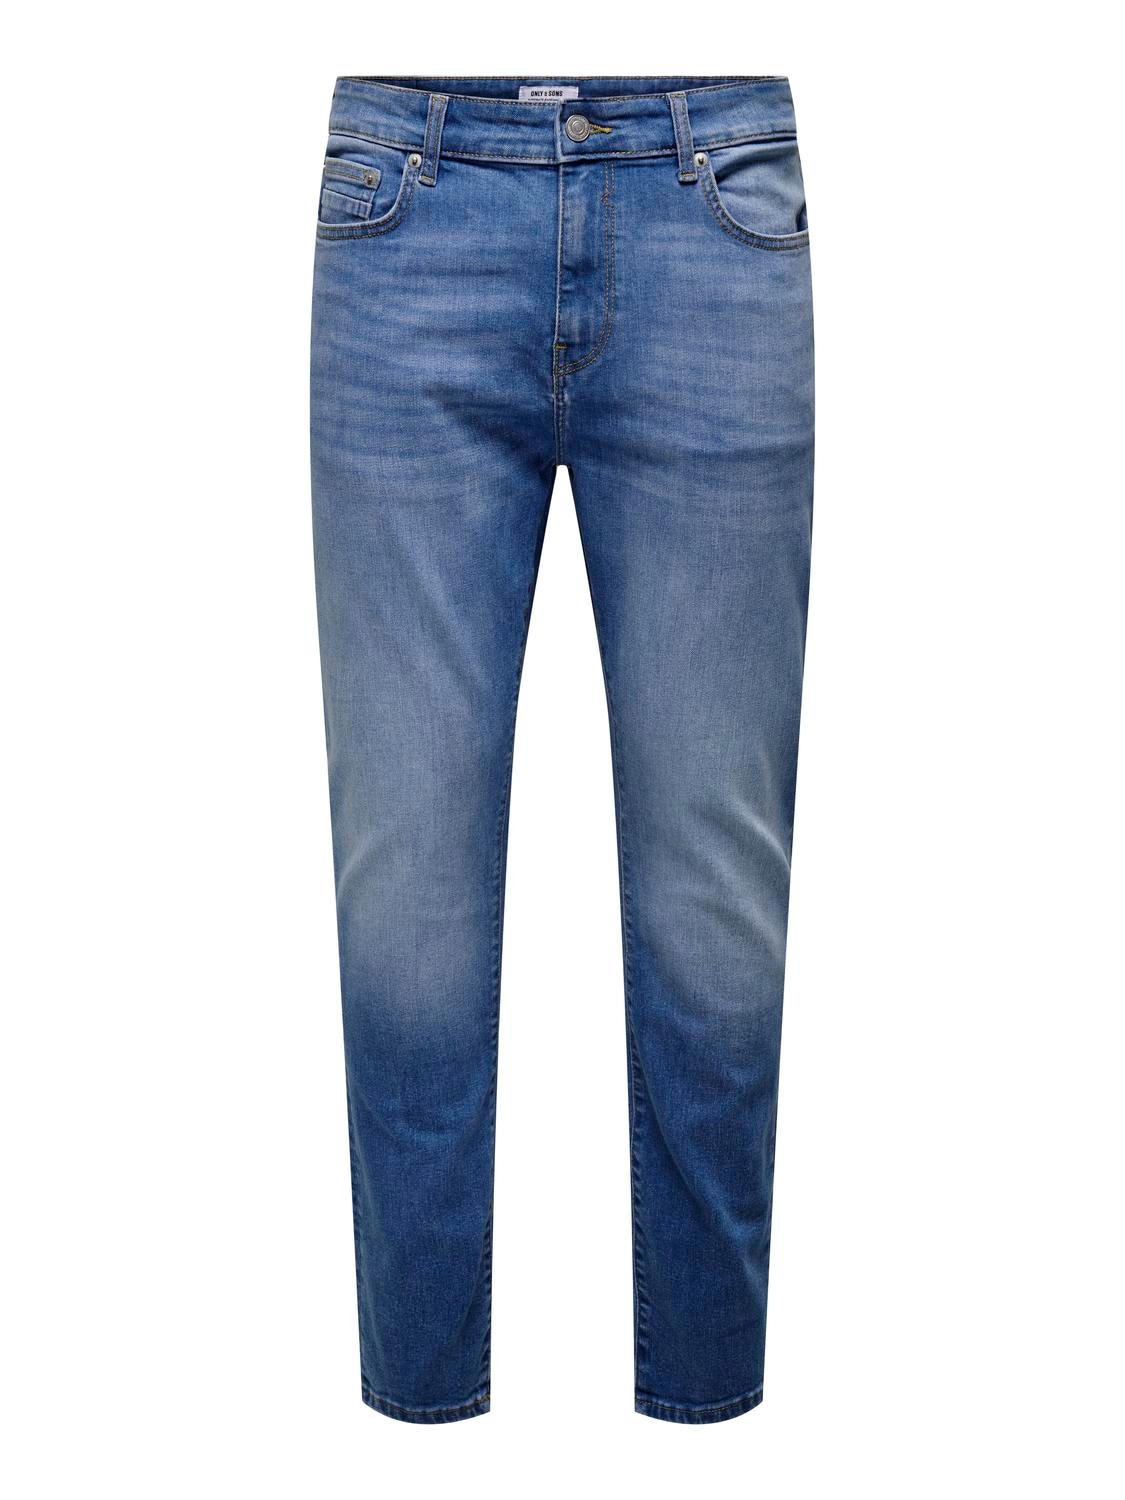 ONLY & SONS ONSRope Slimtape Denim JeansONSRope Slimtape Denim Jeans -Light Medium Blue Denim - 22027844